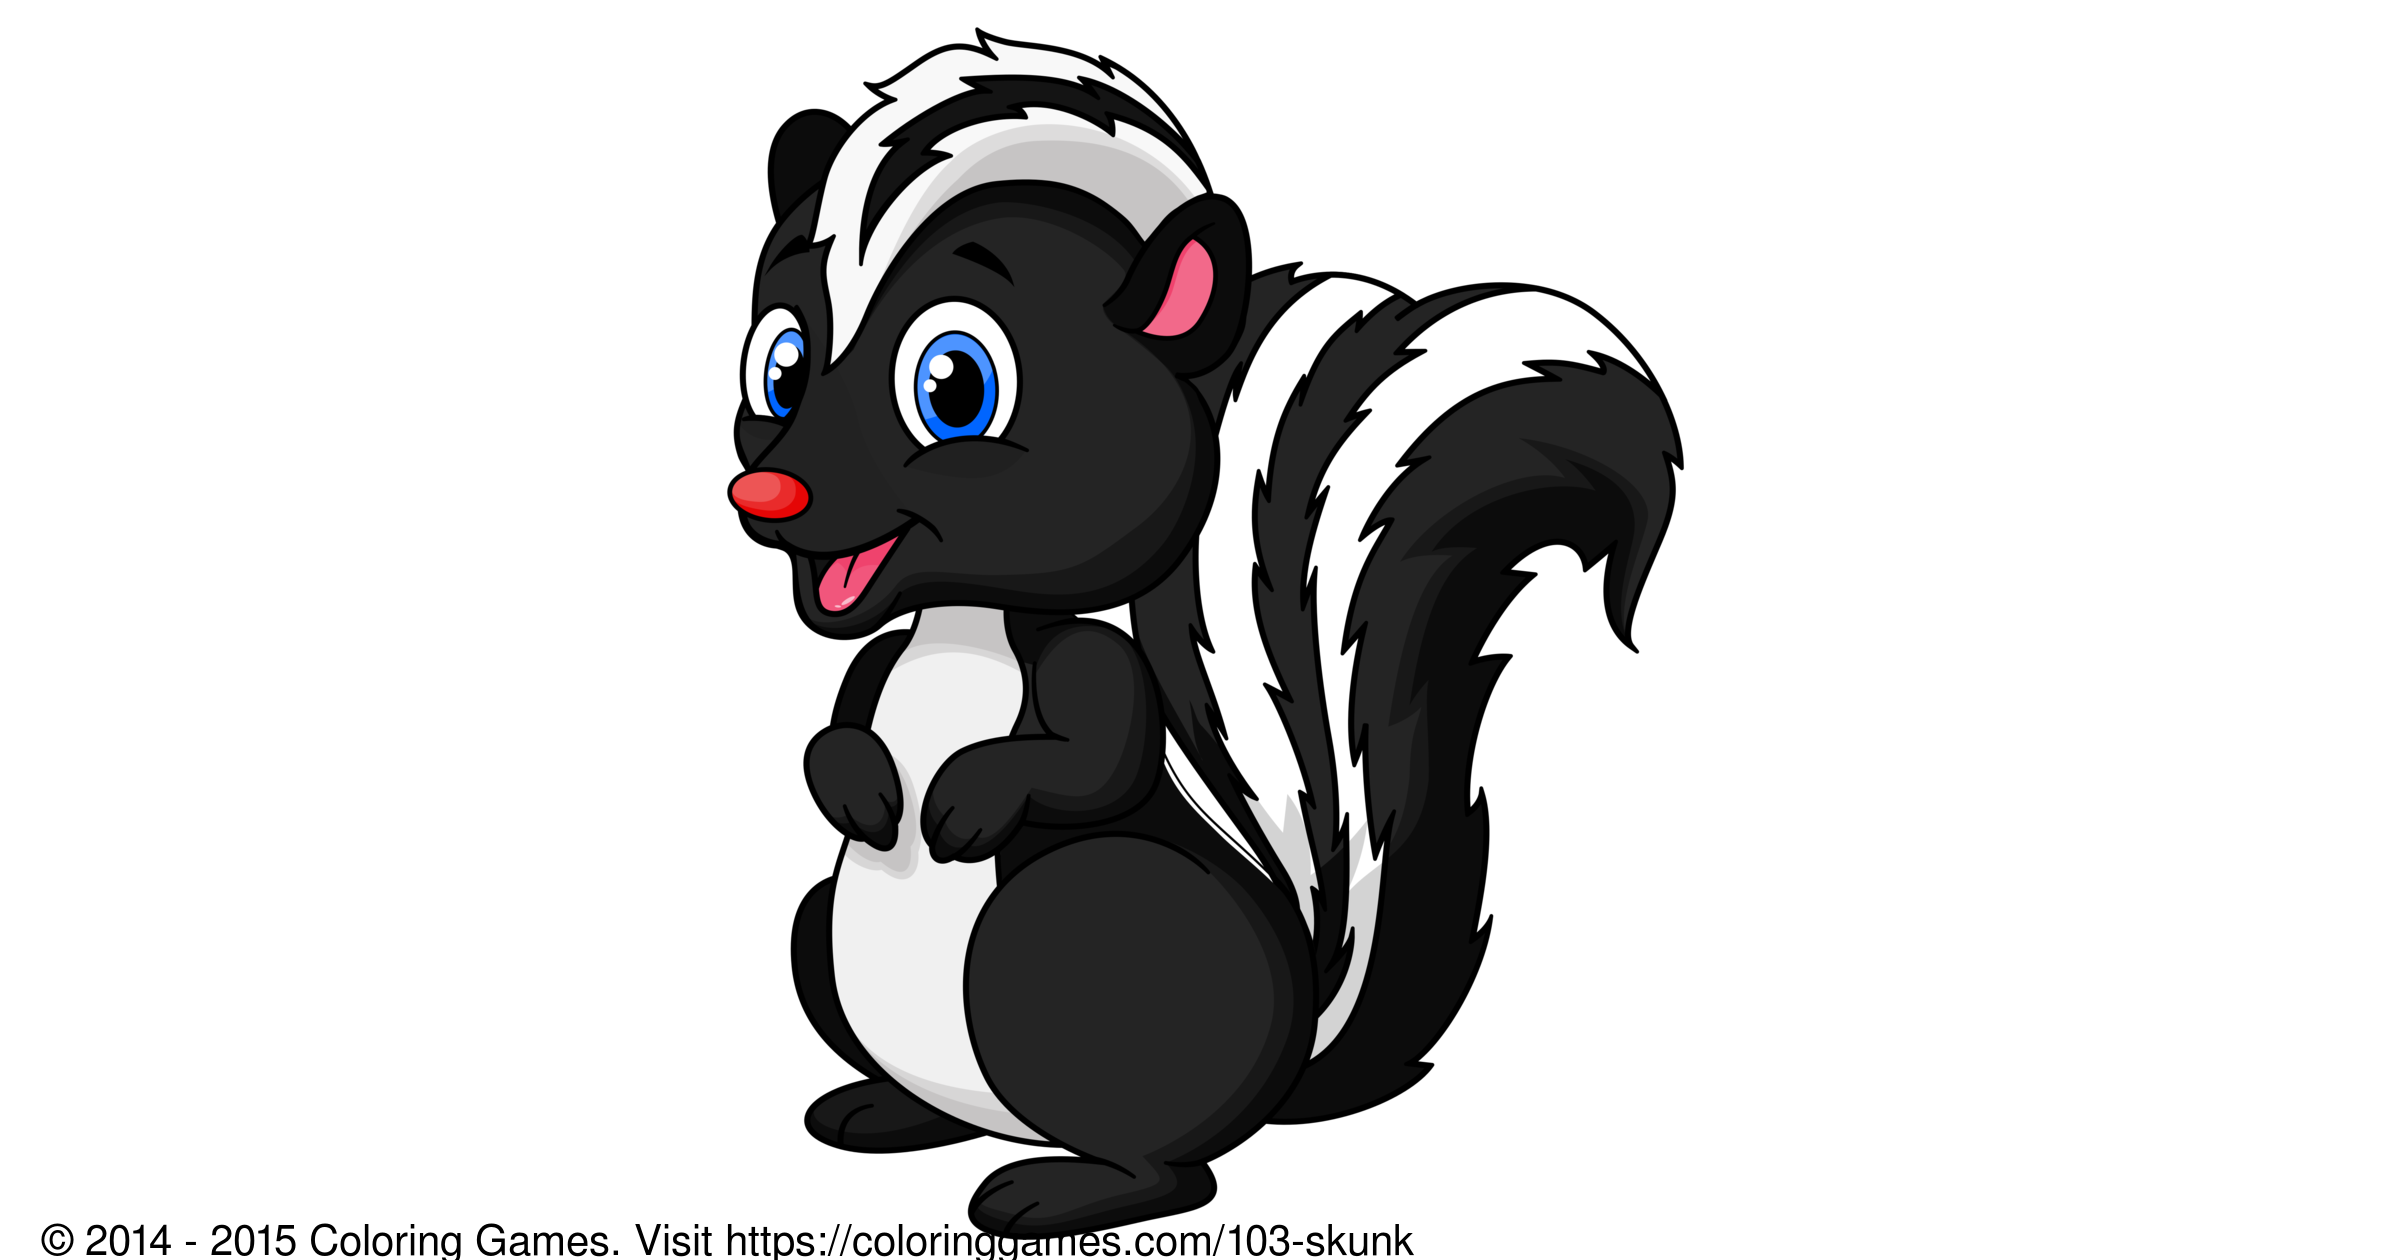 Skunk coloring page & Skunk online coloring game for kids.